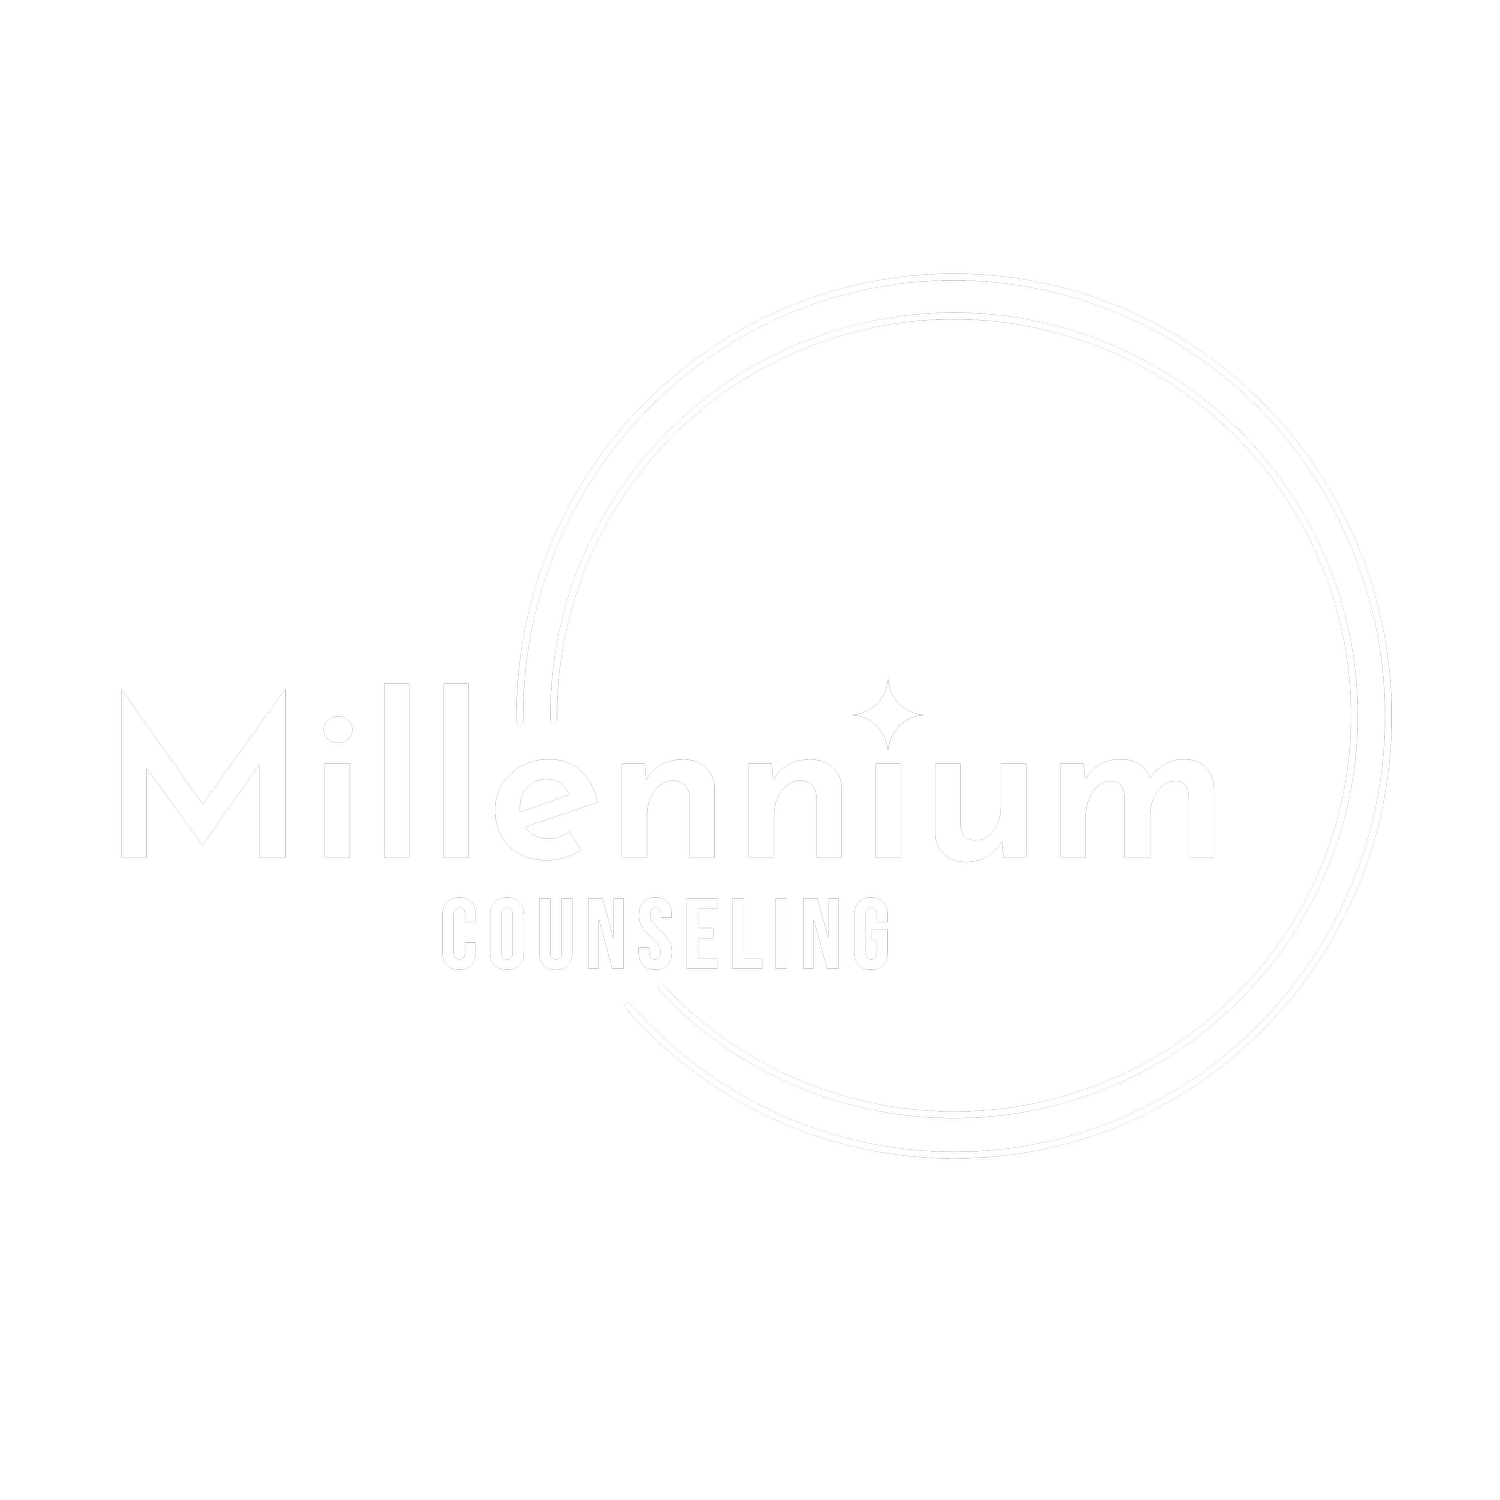 Millennium Counseling